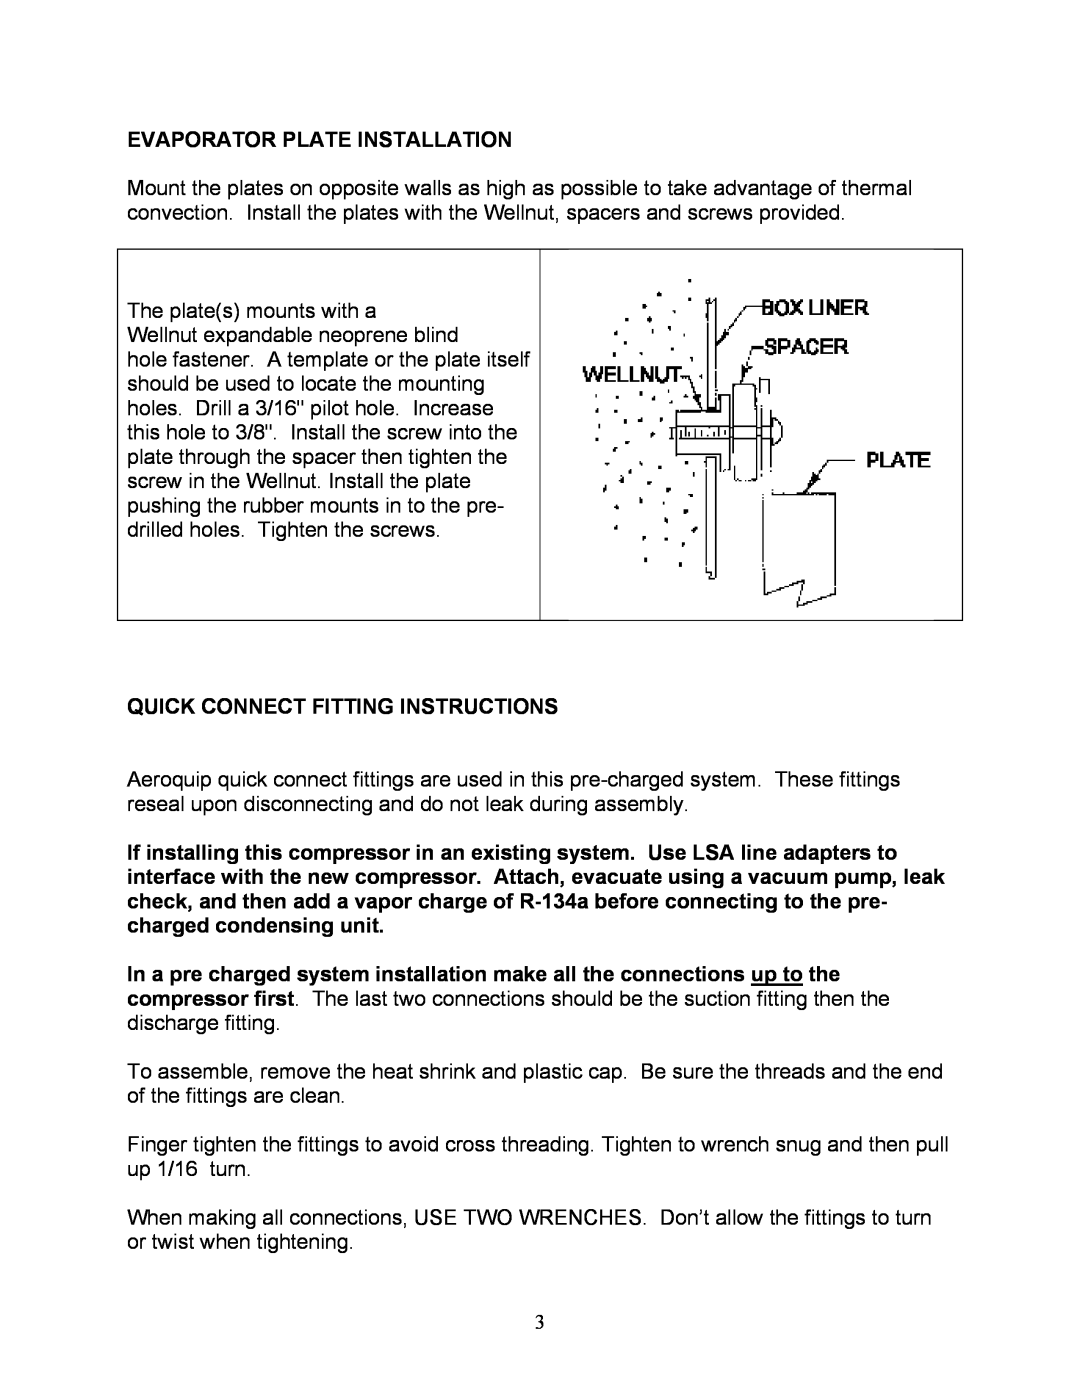 Sea Frost Bait Freezer manual Evaporator Plate Installation 